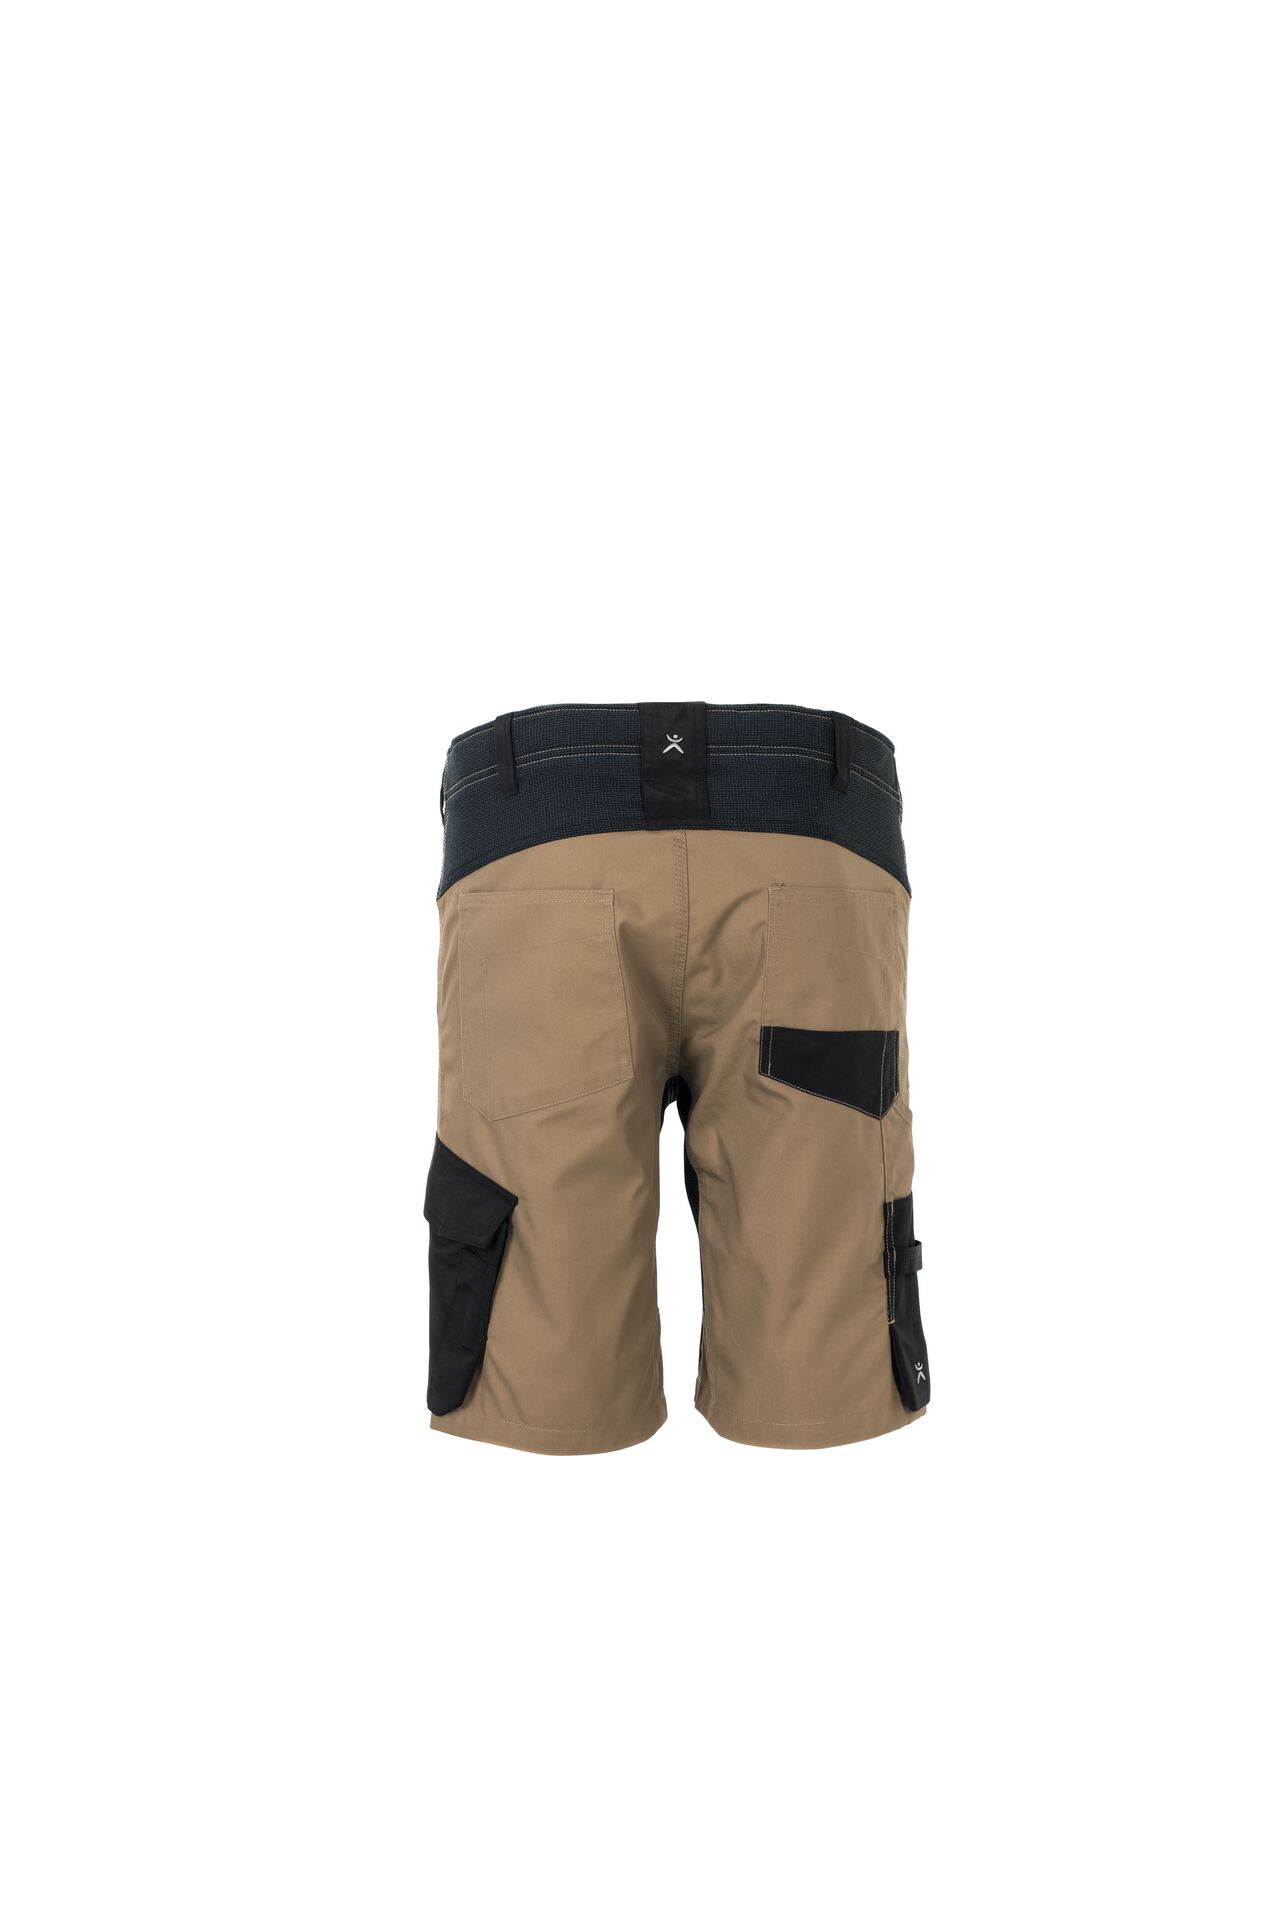 Planam® - Norit - Herren Shorts